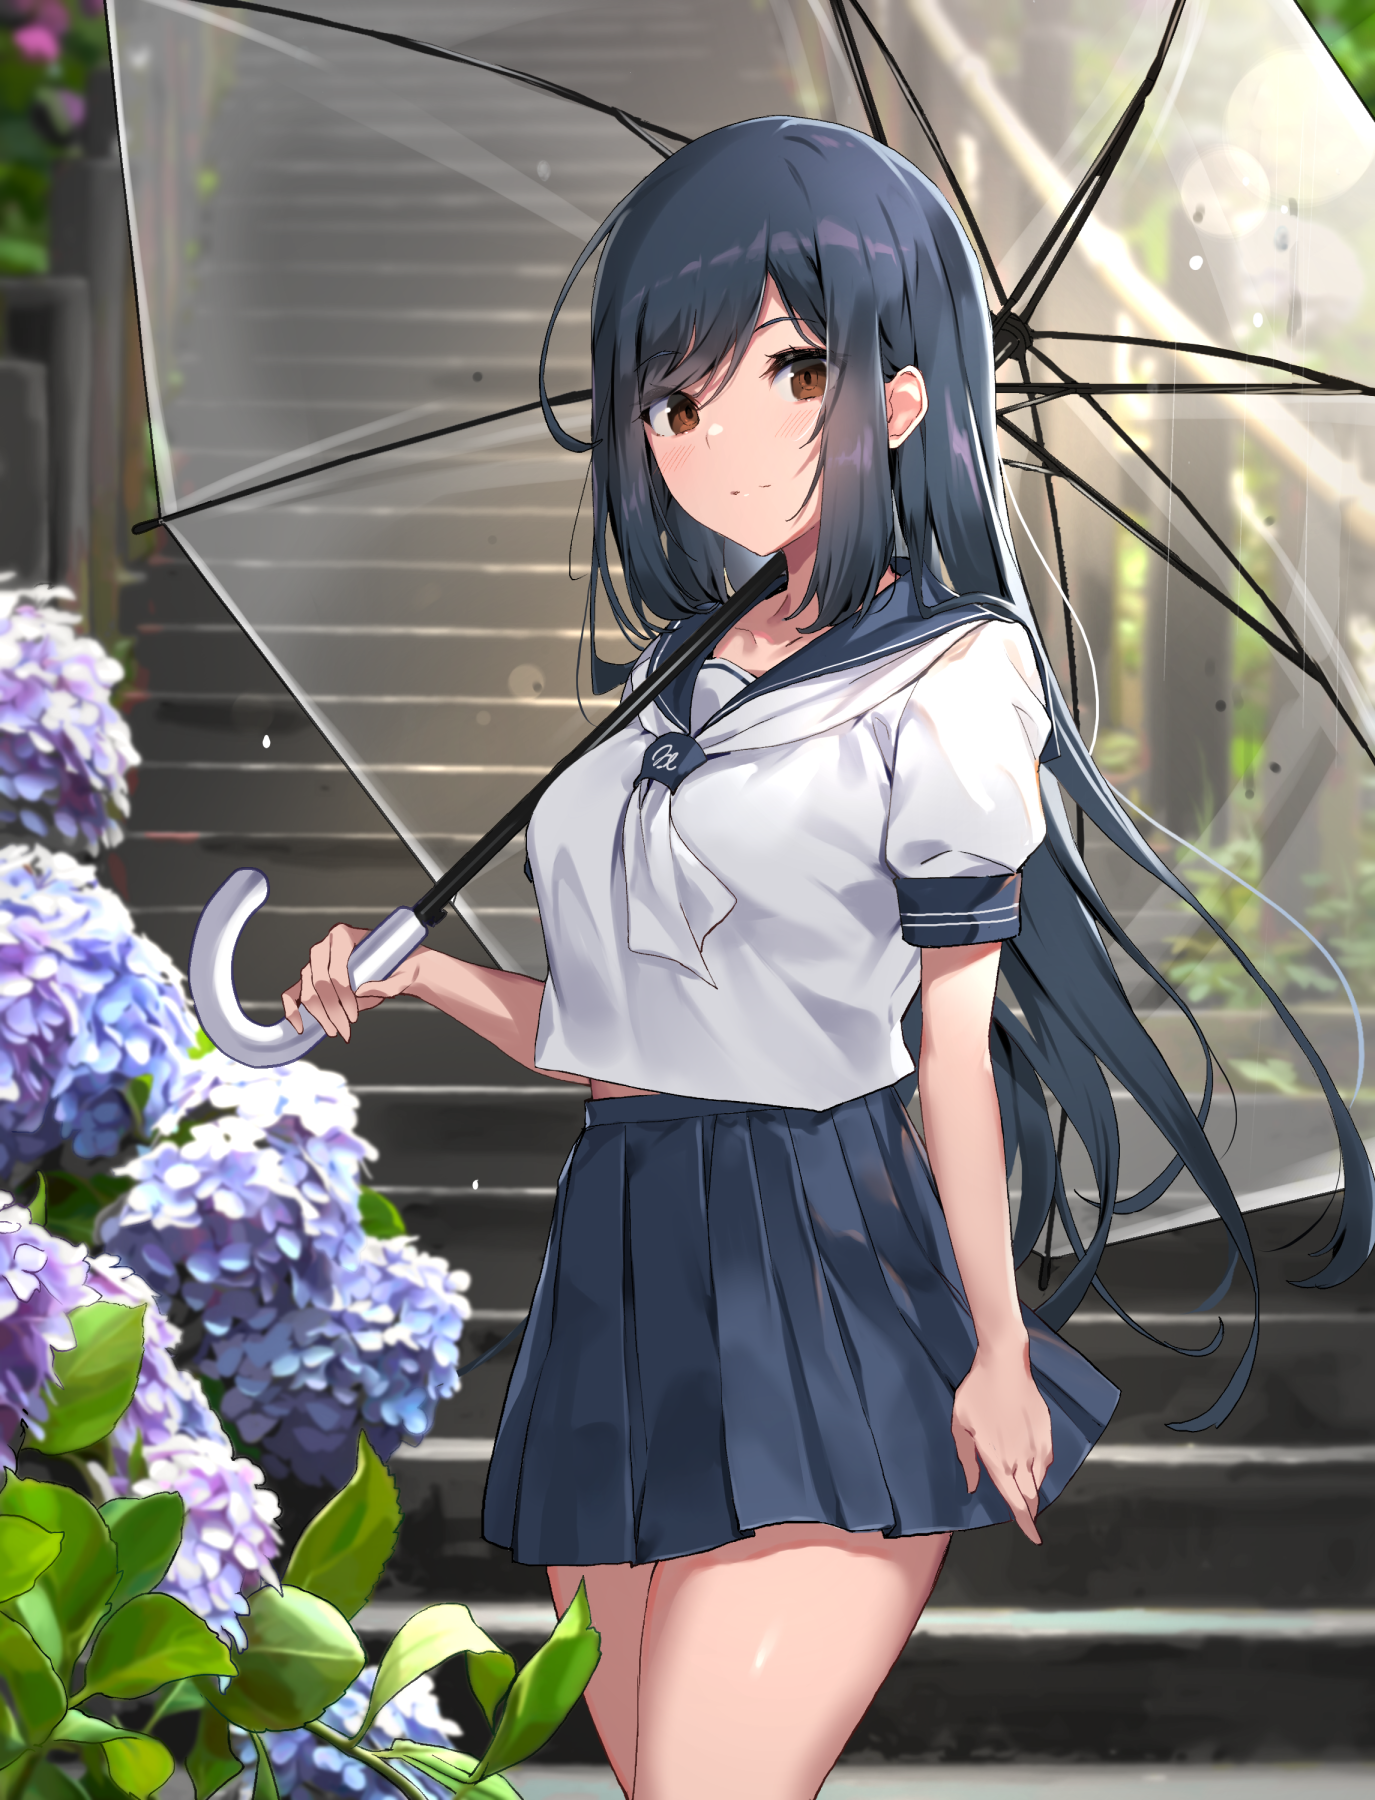 Anime 1375x1800 anime anime girls digital art artwork 2D portrait display umbrella flowers stairs school uniform brown eyes dark hair long hair Icomochi